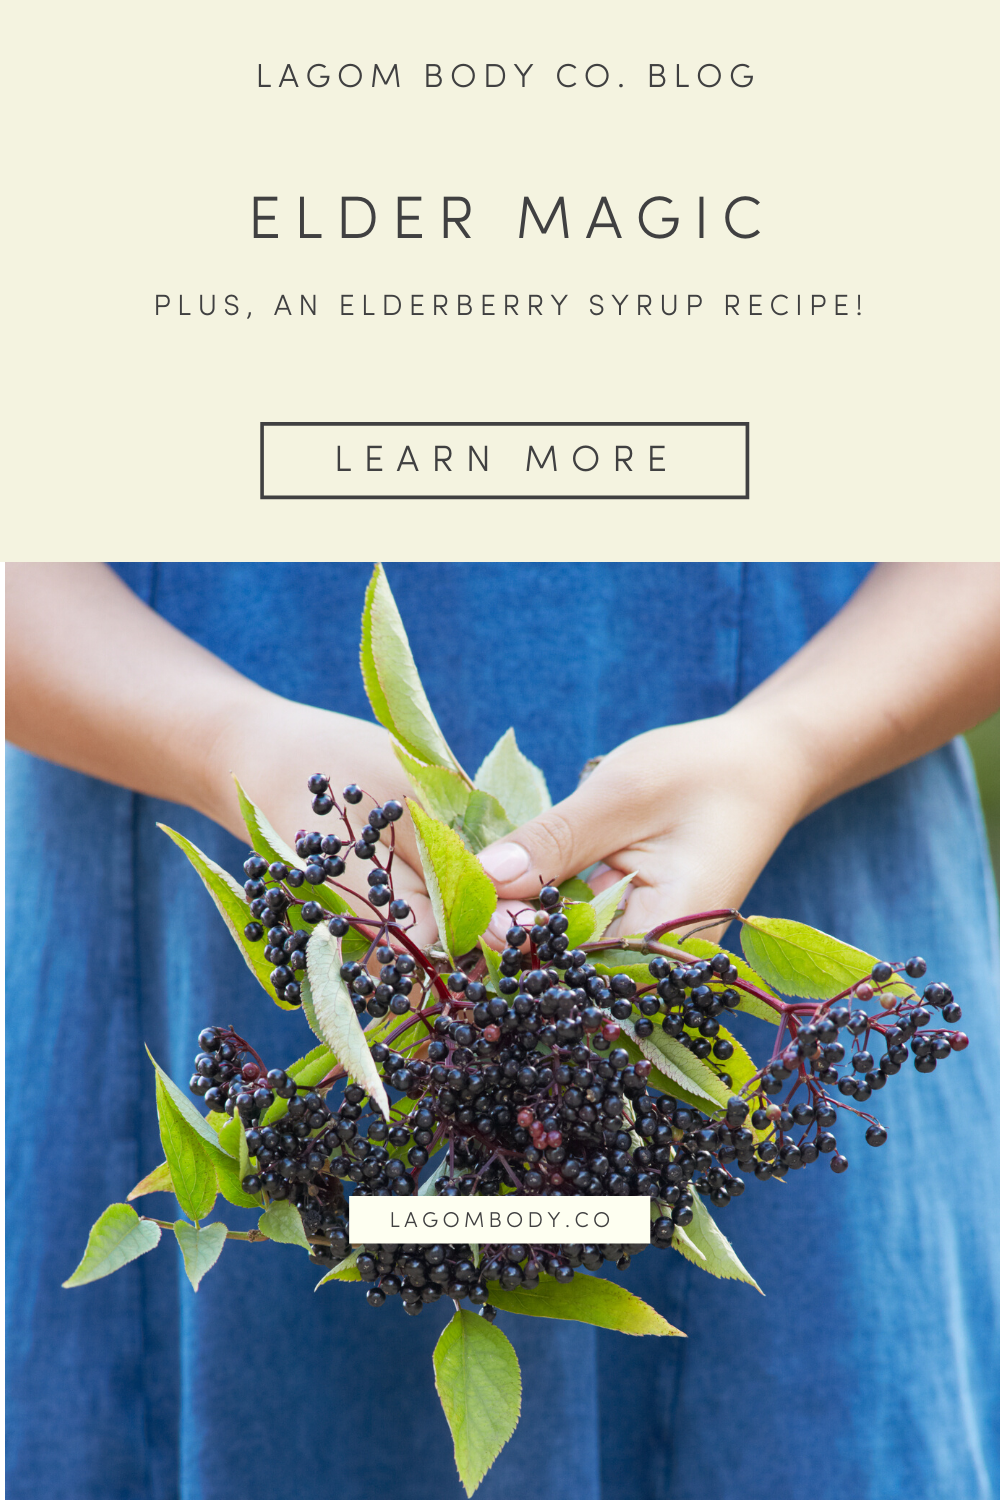 Elder Magic (Plus, an Elderberry Syrup Recipe) by Lagom Body Co. Pinterest Promo